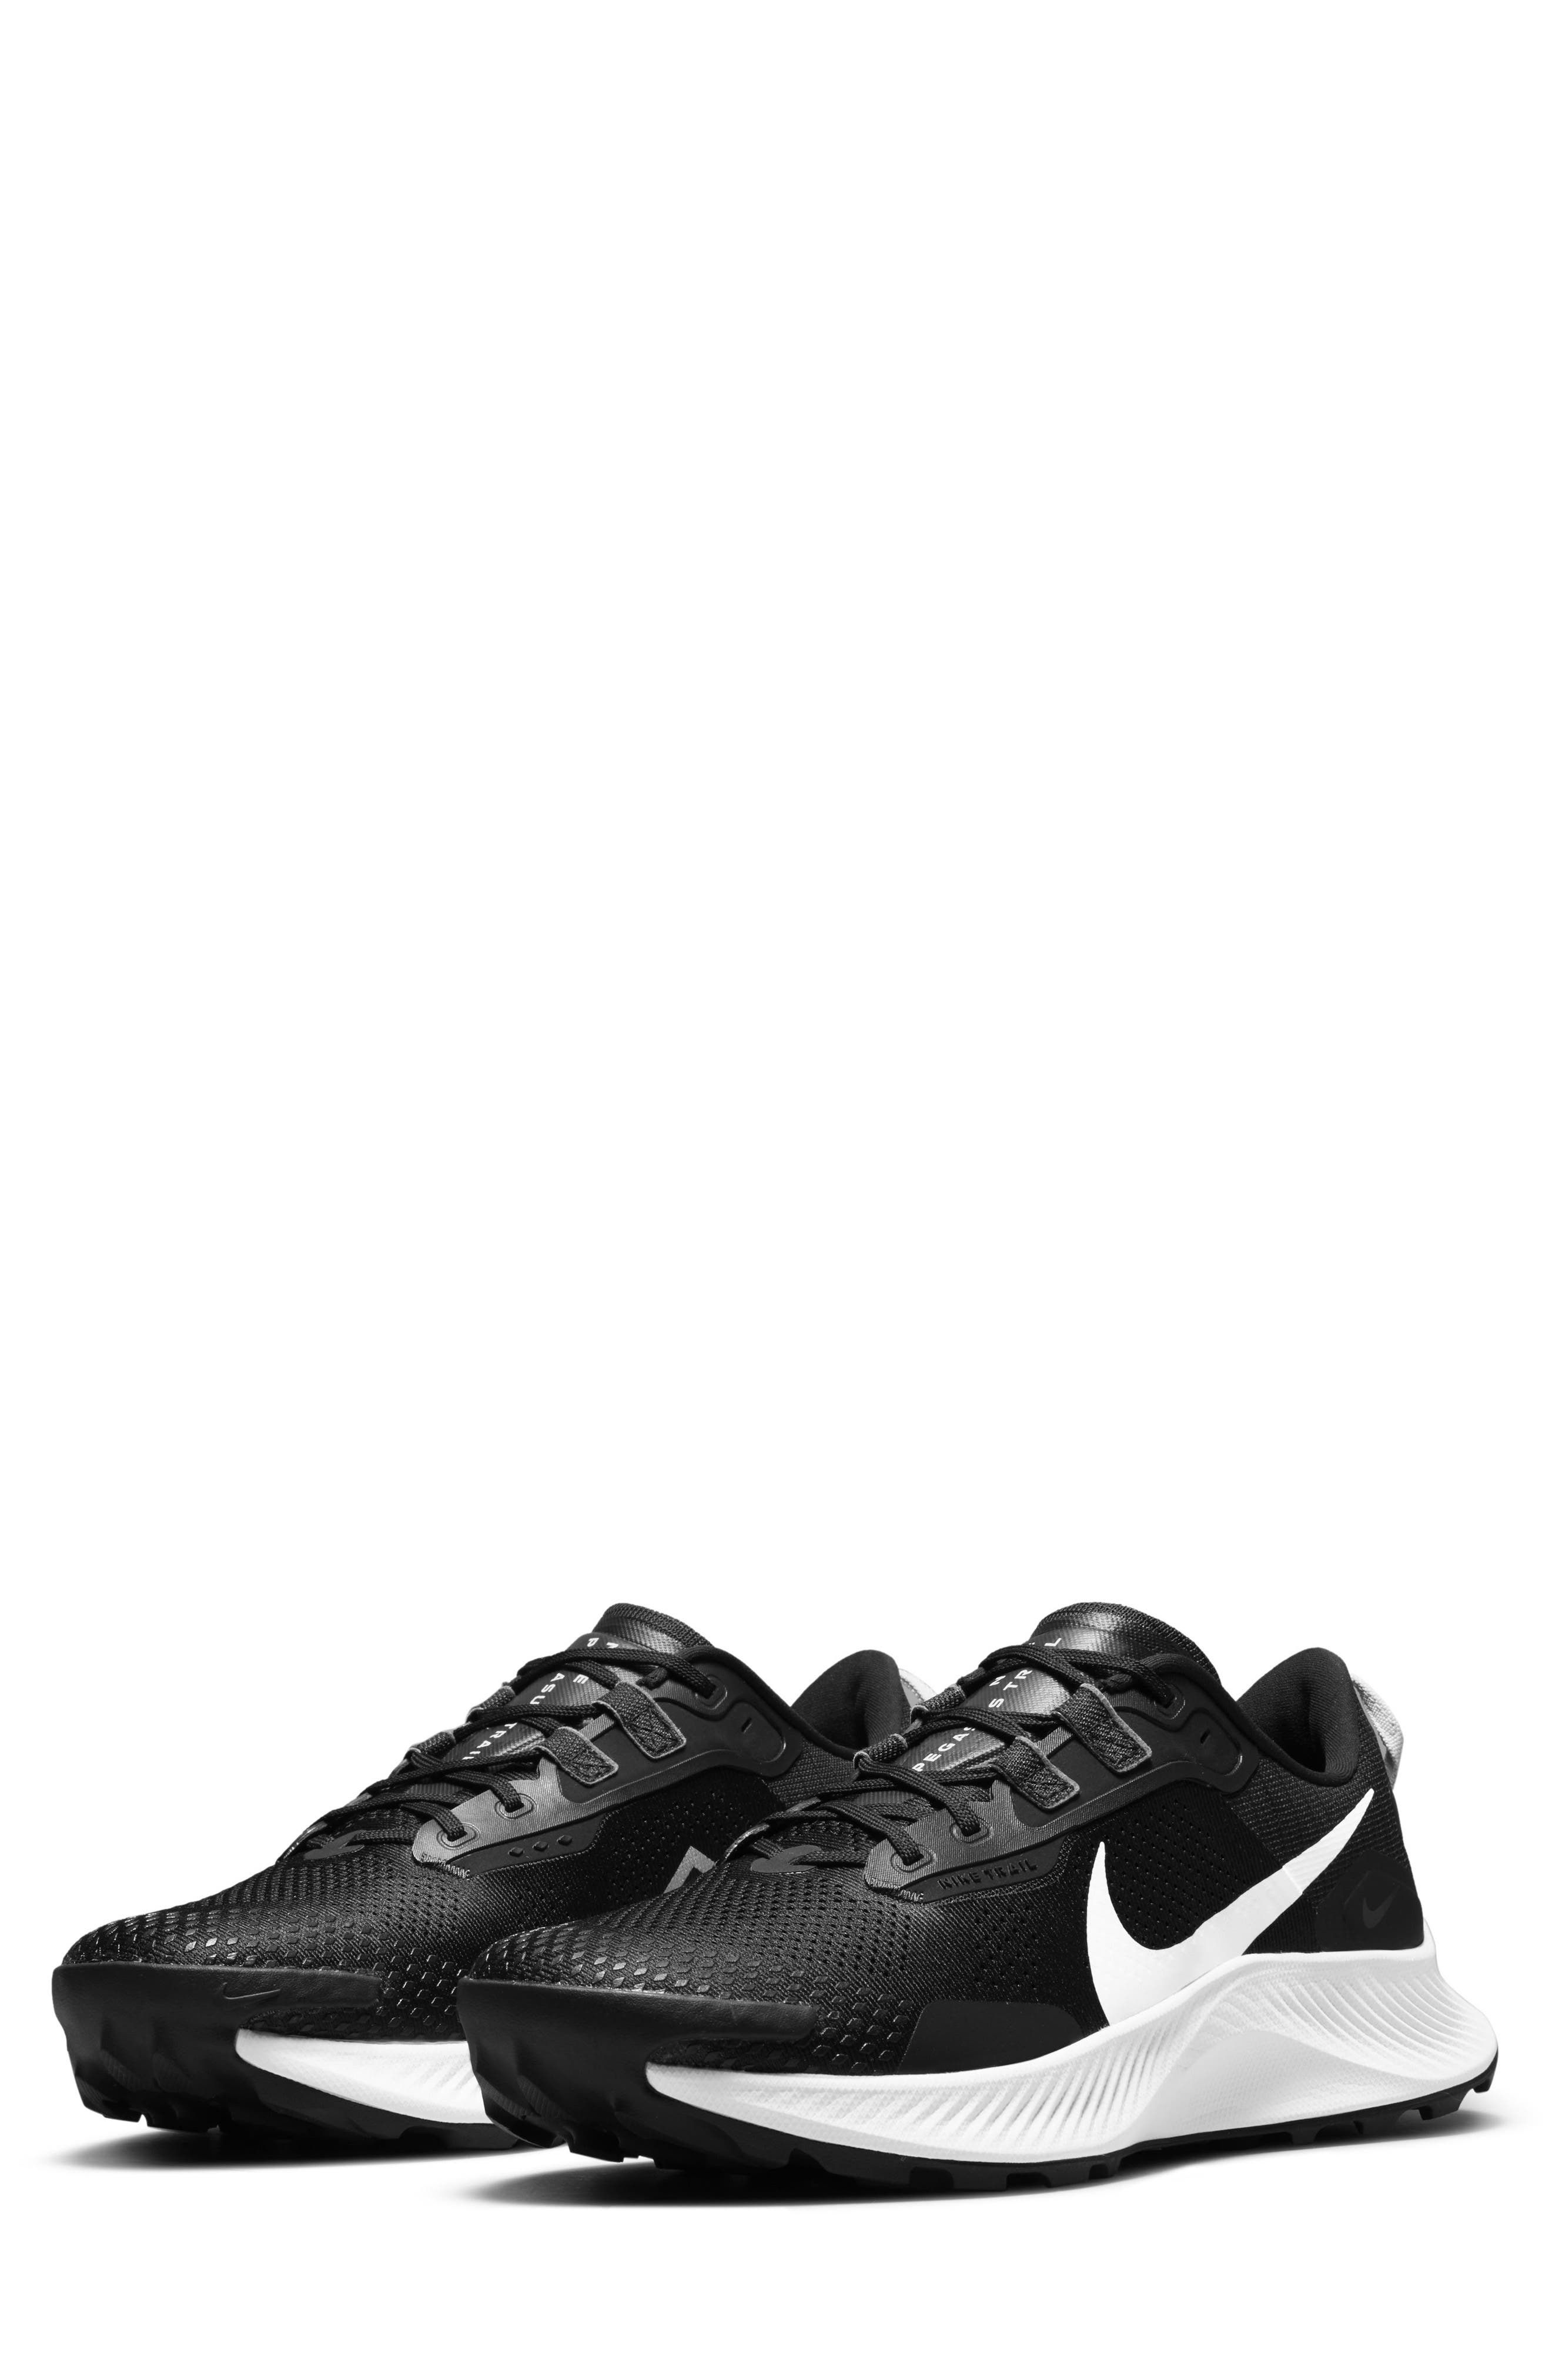 nike black and white running shoes men